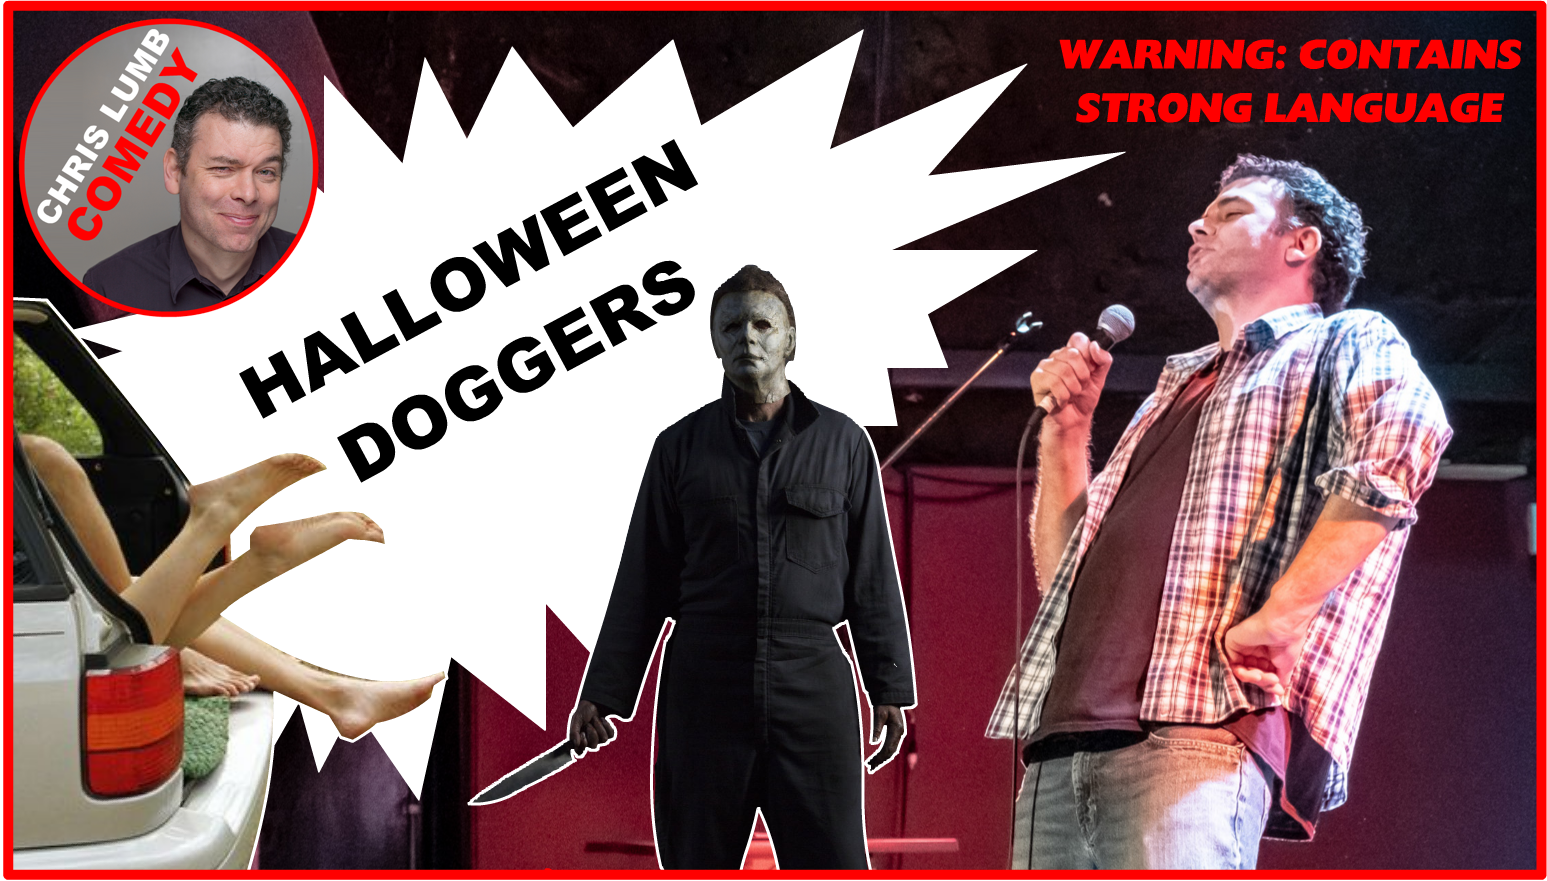 Chris Lumb Comedy "Halloween Doggers"